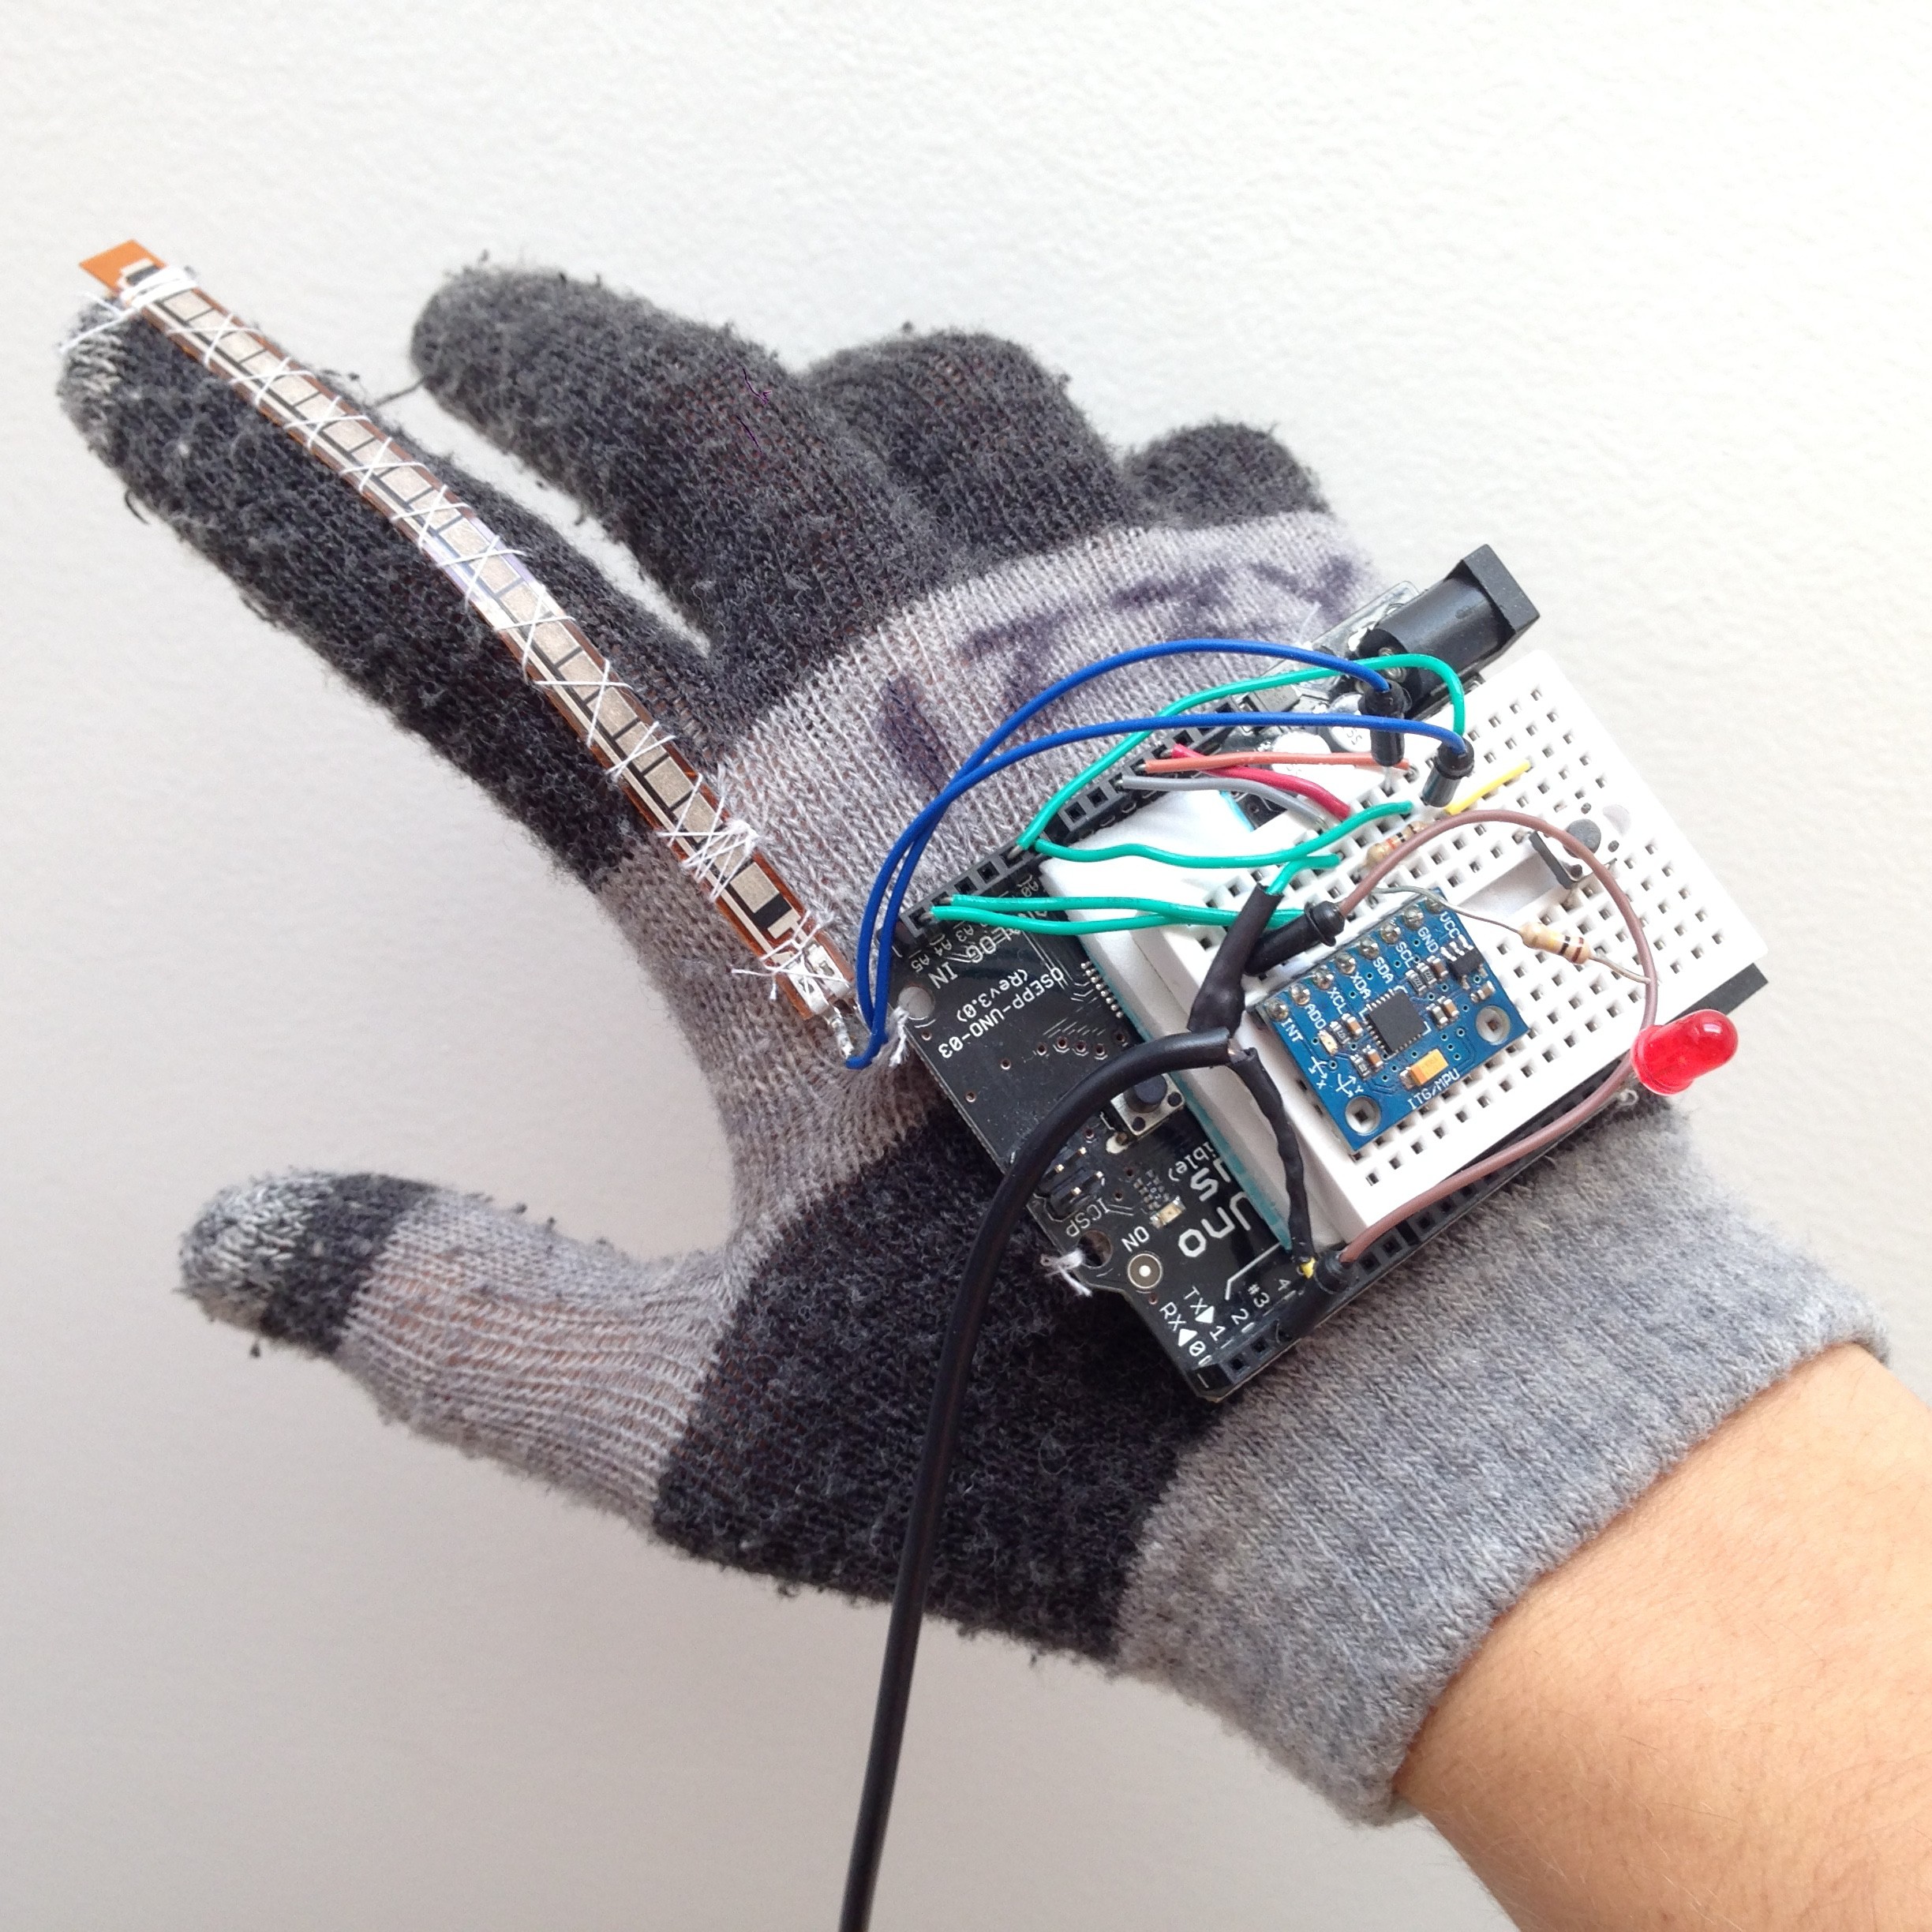 Manucon - A glove based controller